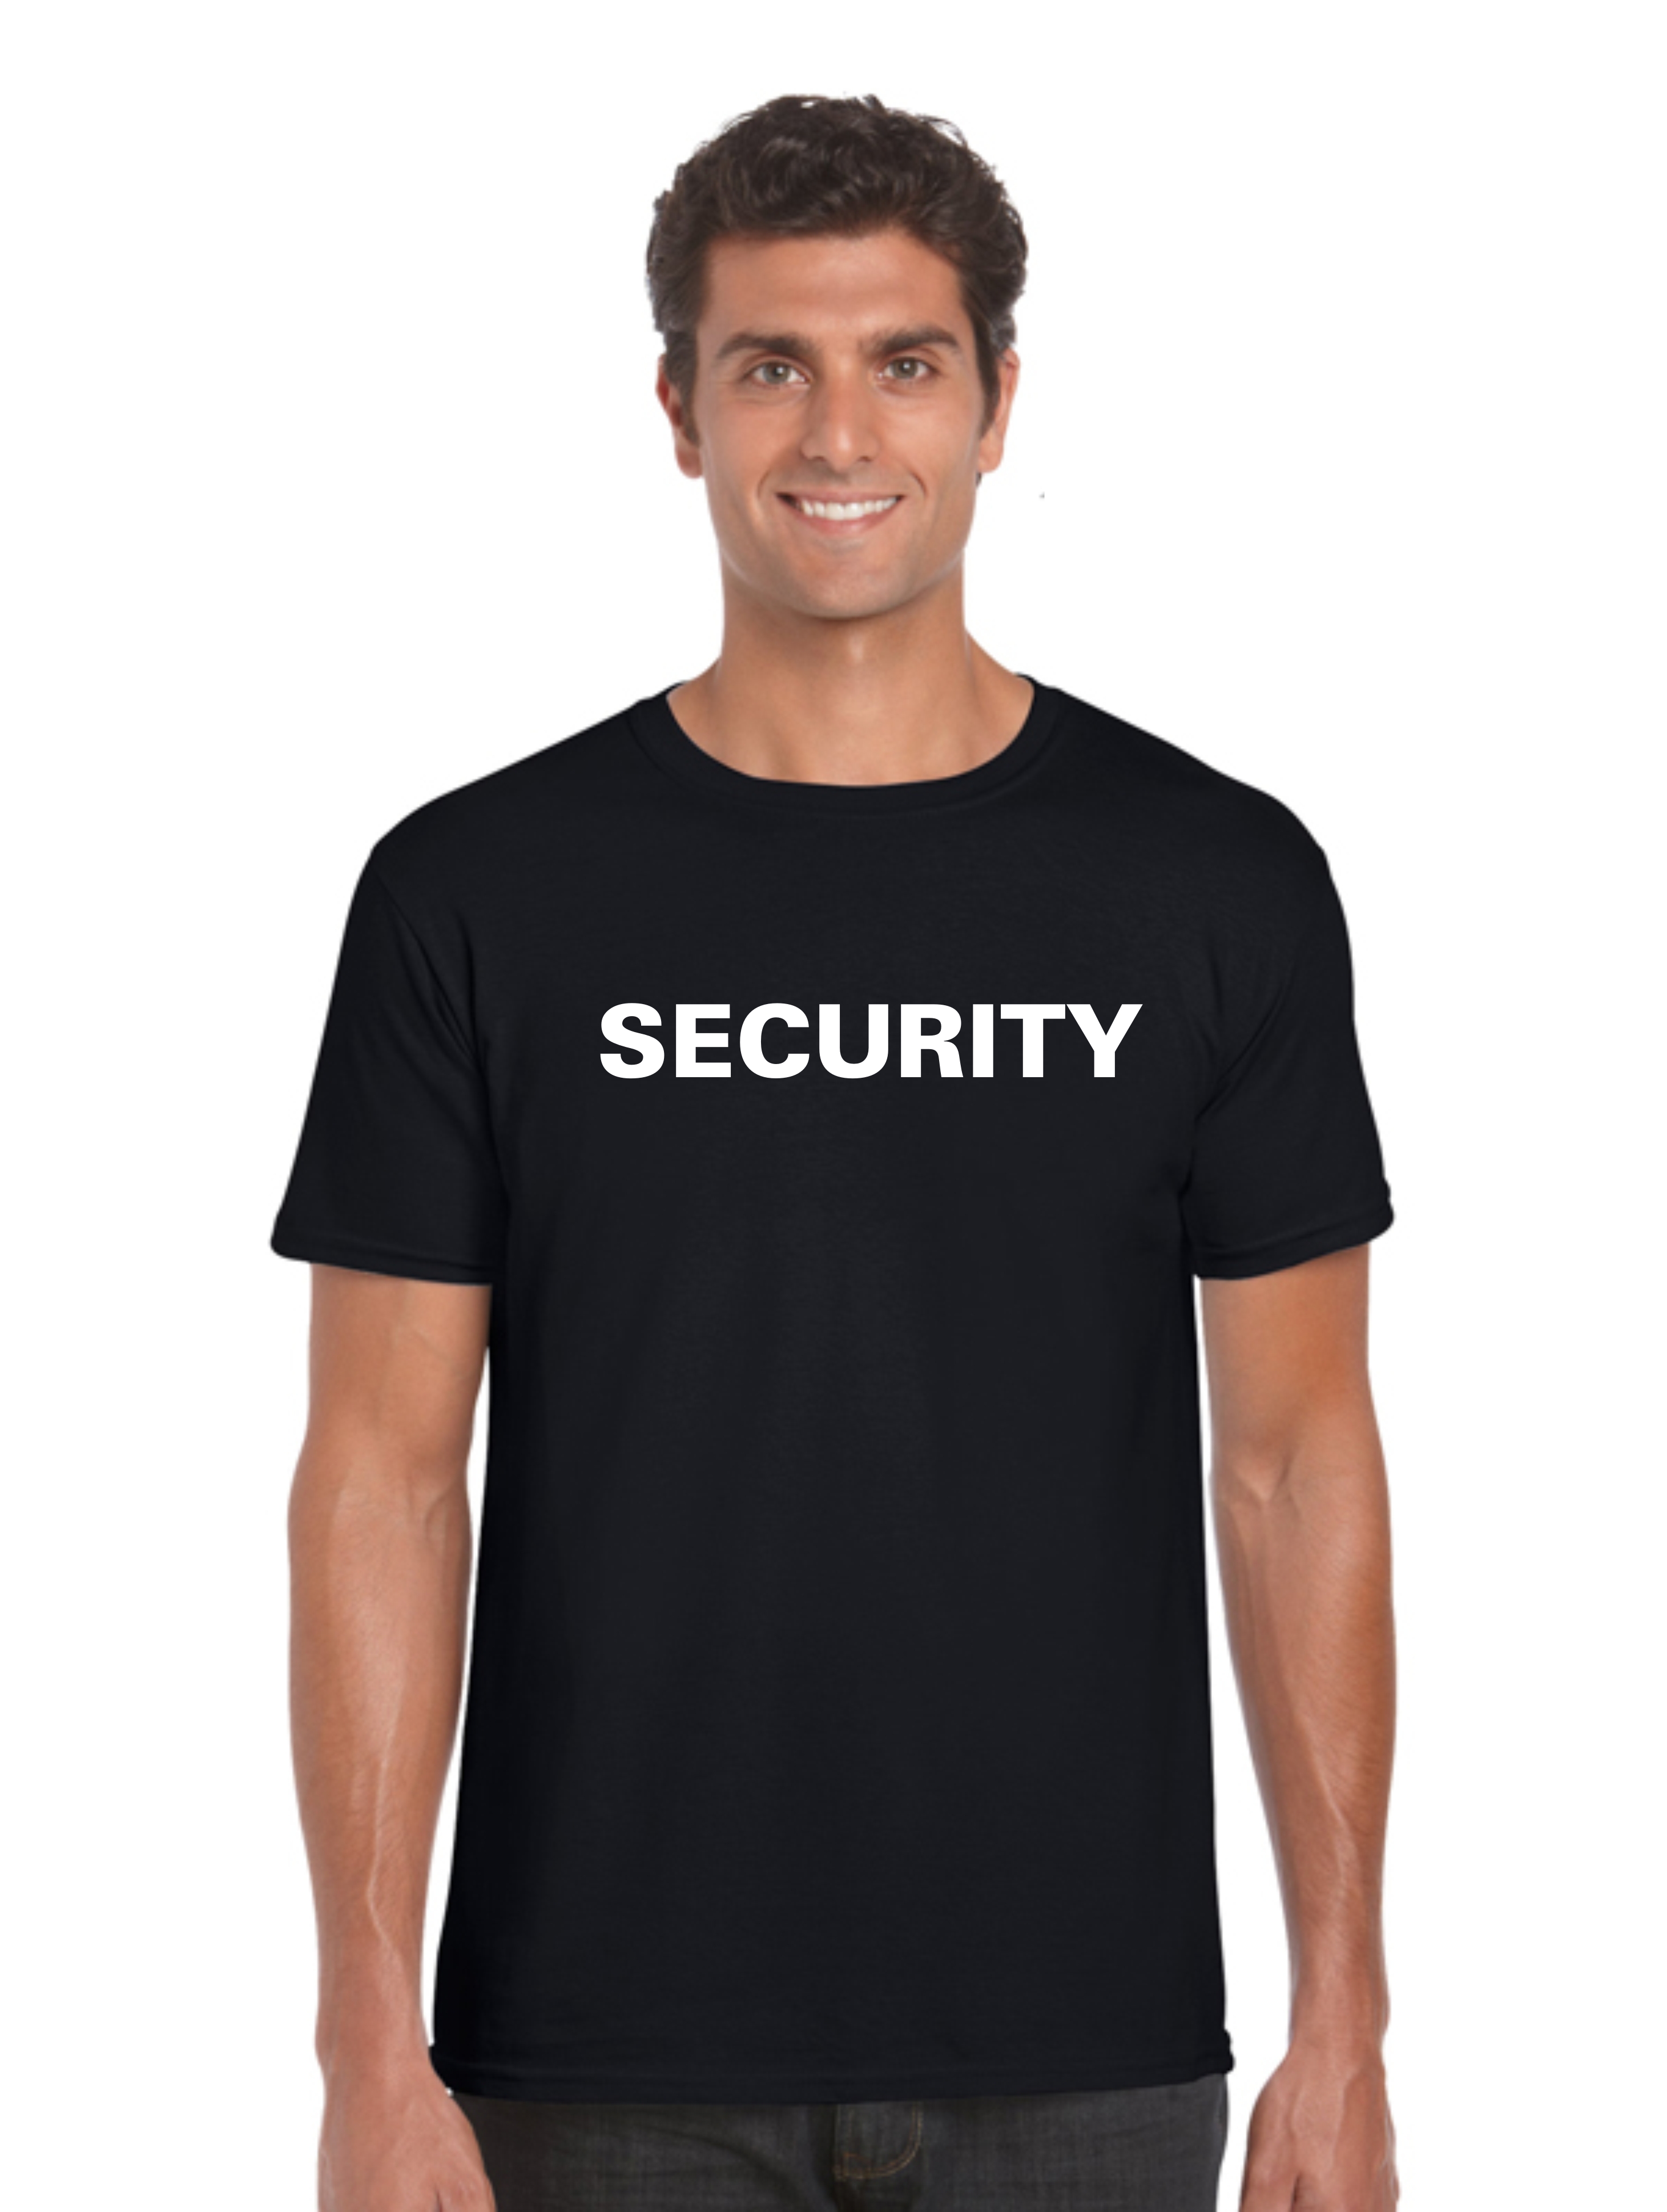 Security Companies